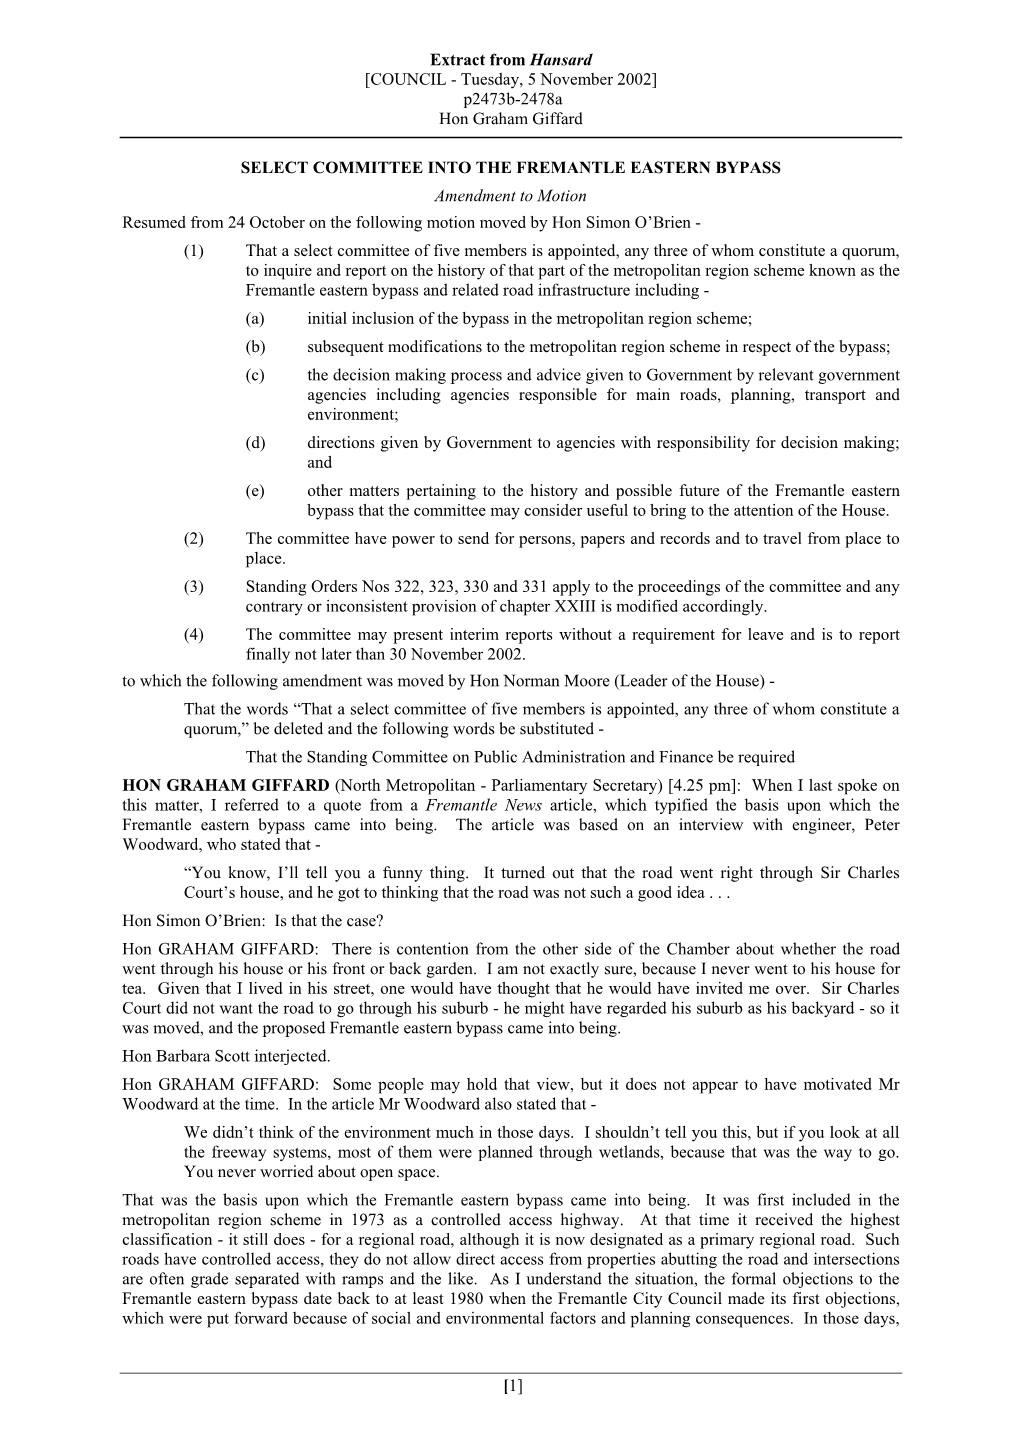 Extract from Hansard [COUNCIL - Tuesday, 5 November 2002] P2473b-2478A Hon Graham Giffard